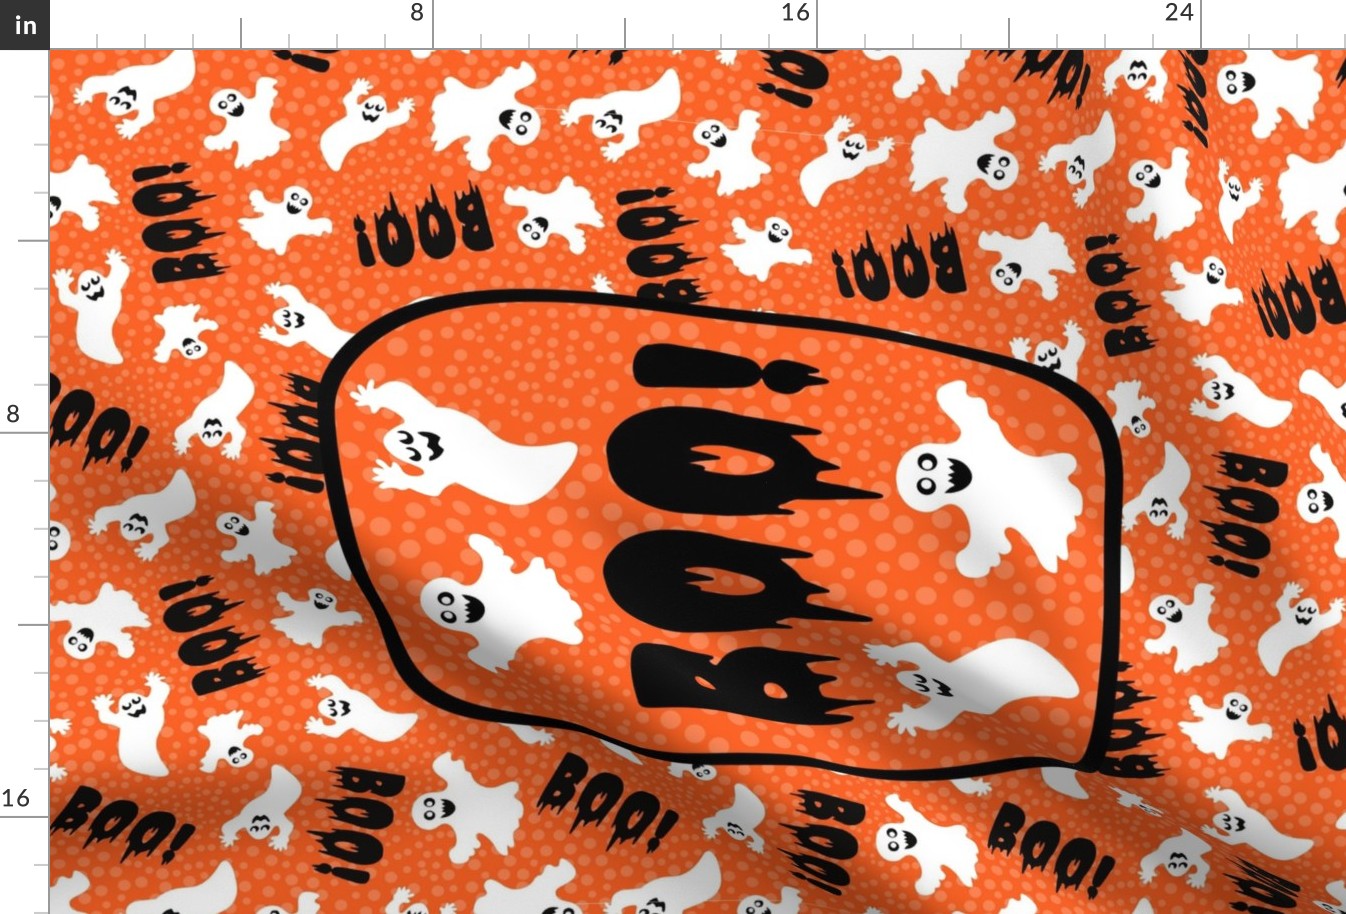 Large 27x18 Fat Quarter Panel Boo! White Creepy Halloween Ghosts for Tea Towel or Wall Hanging on Pumpkin Orange